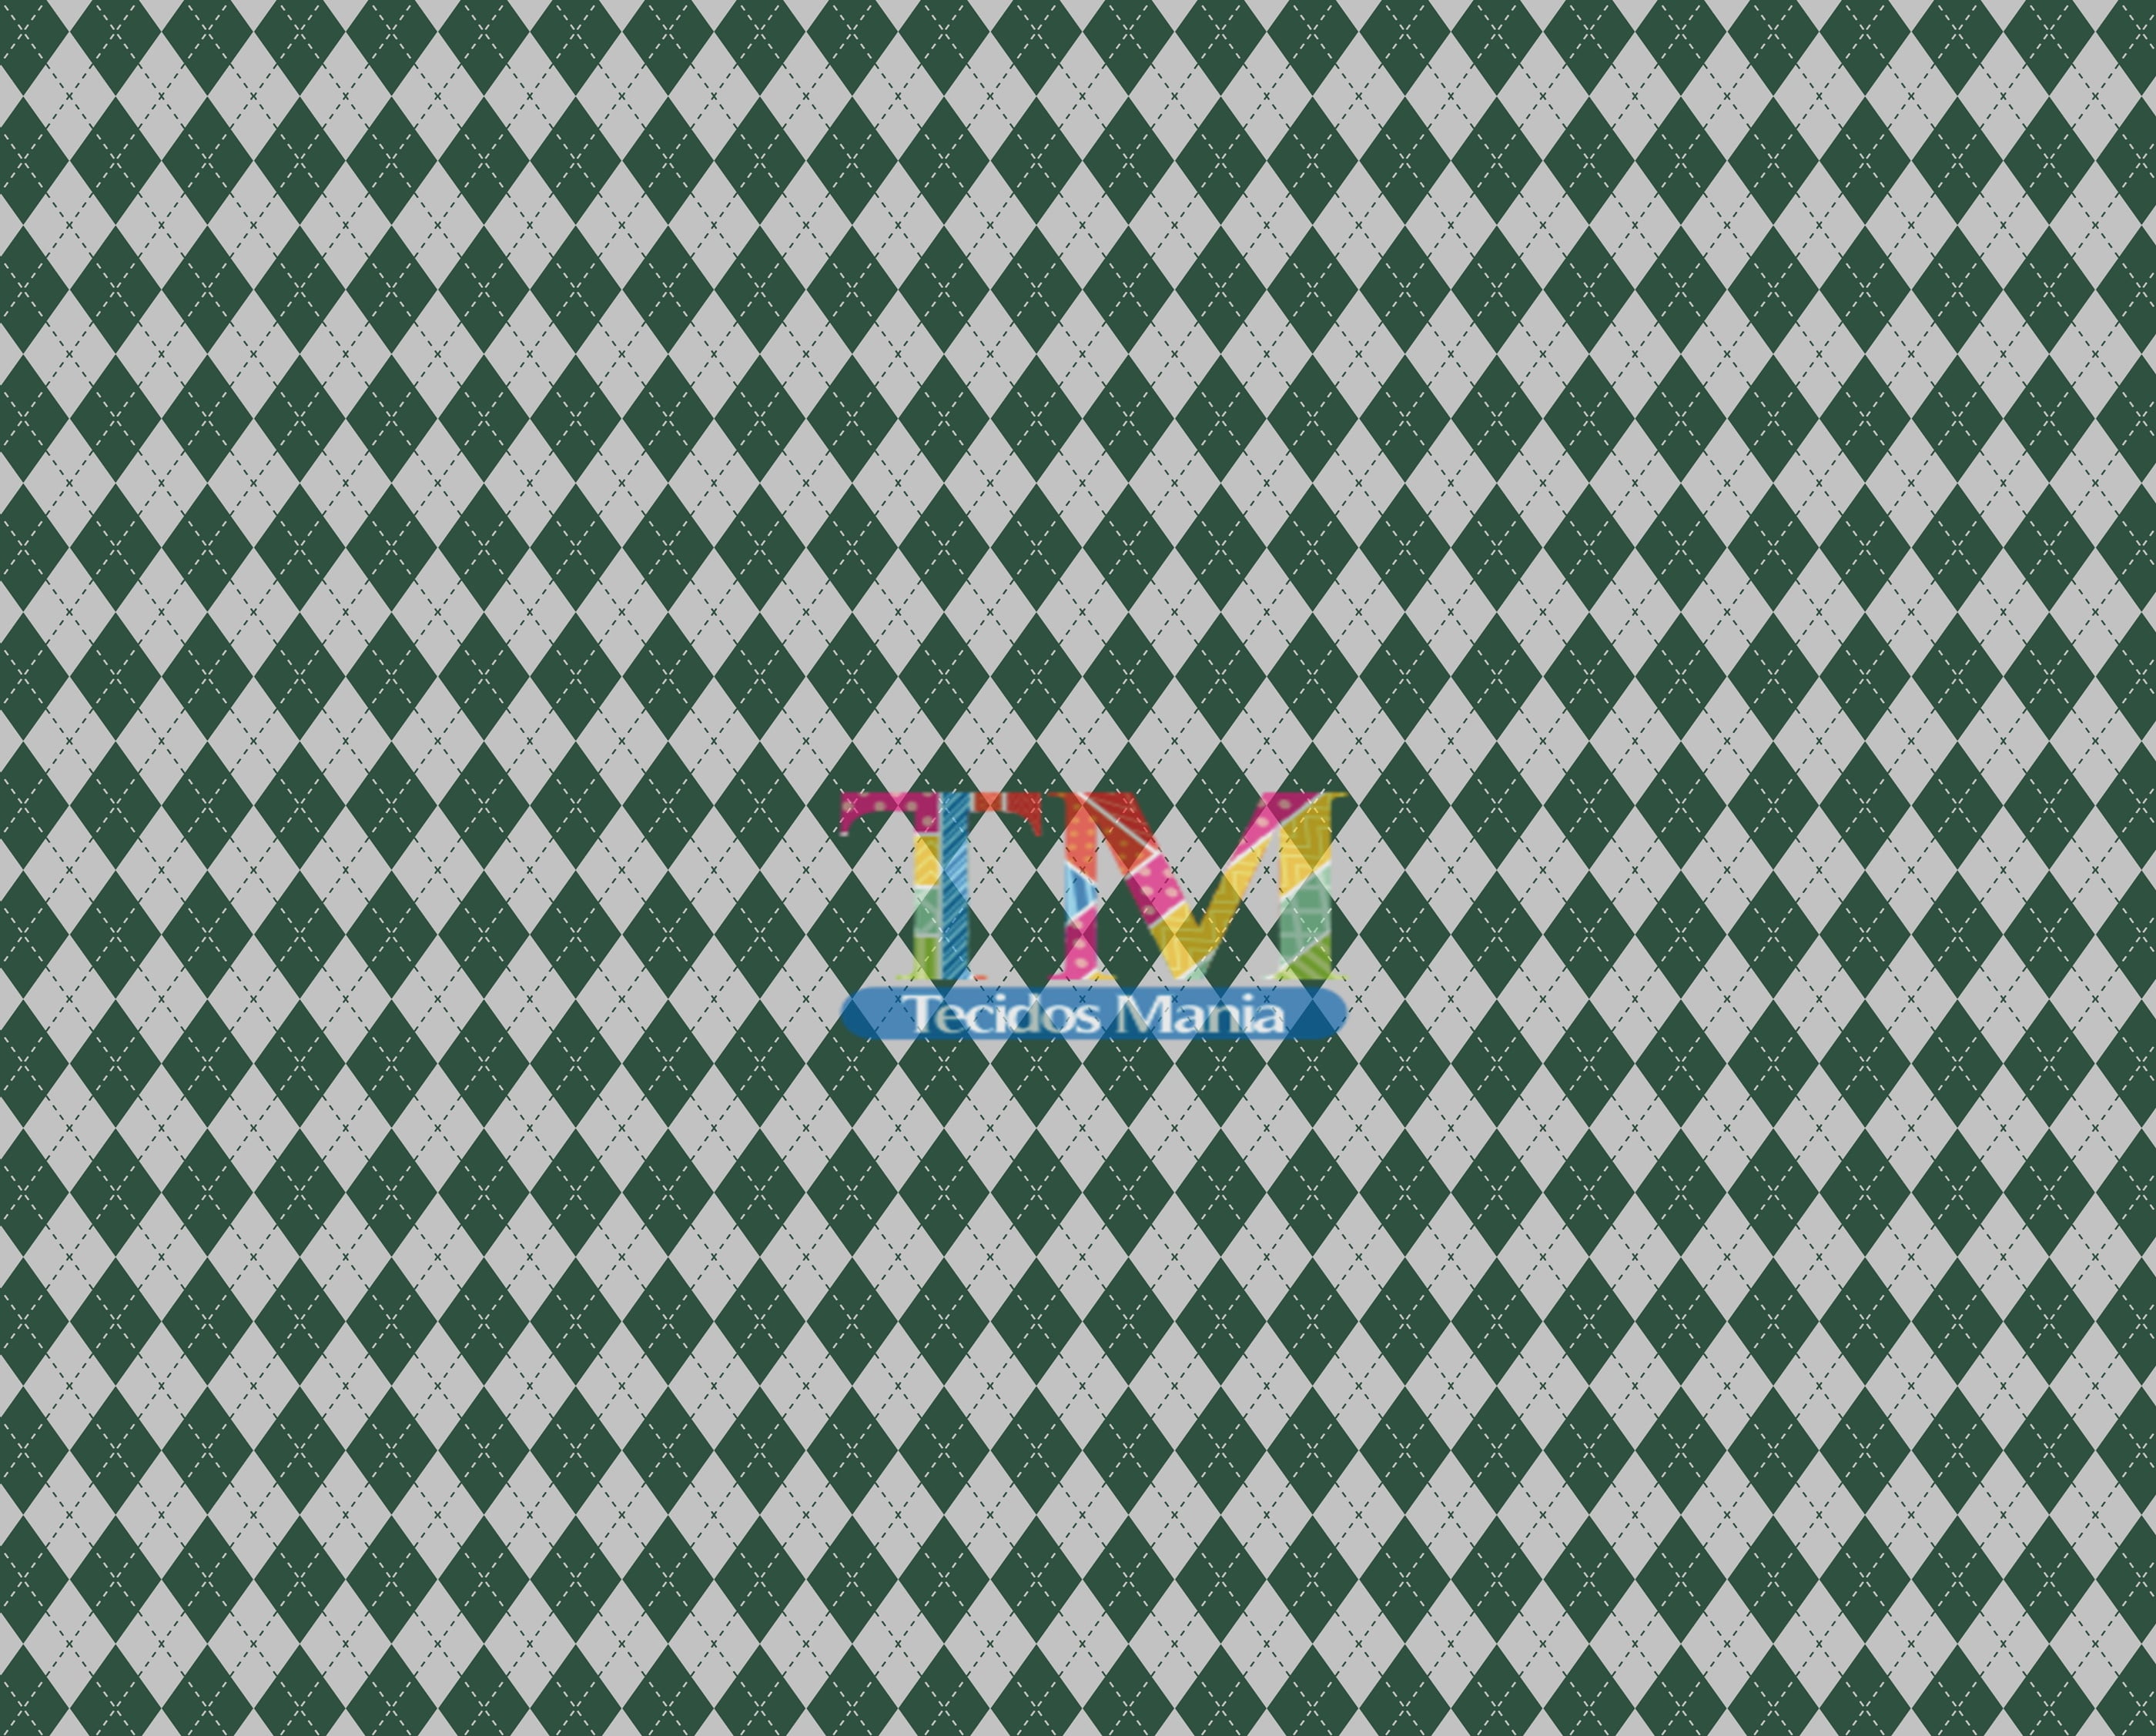 Tecido tricoline, microfibra ou gabardine estampado - Harry Potter - xadrez - Cinza com verde